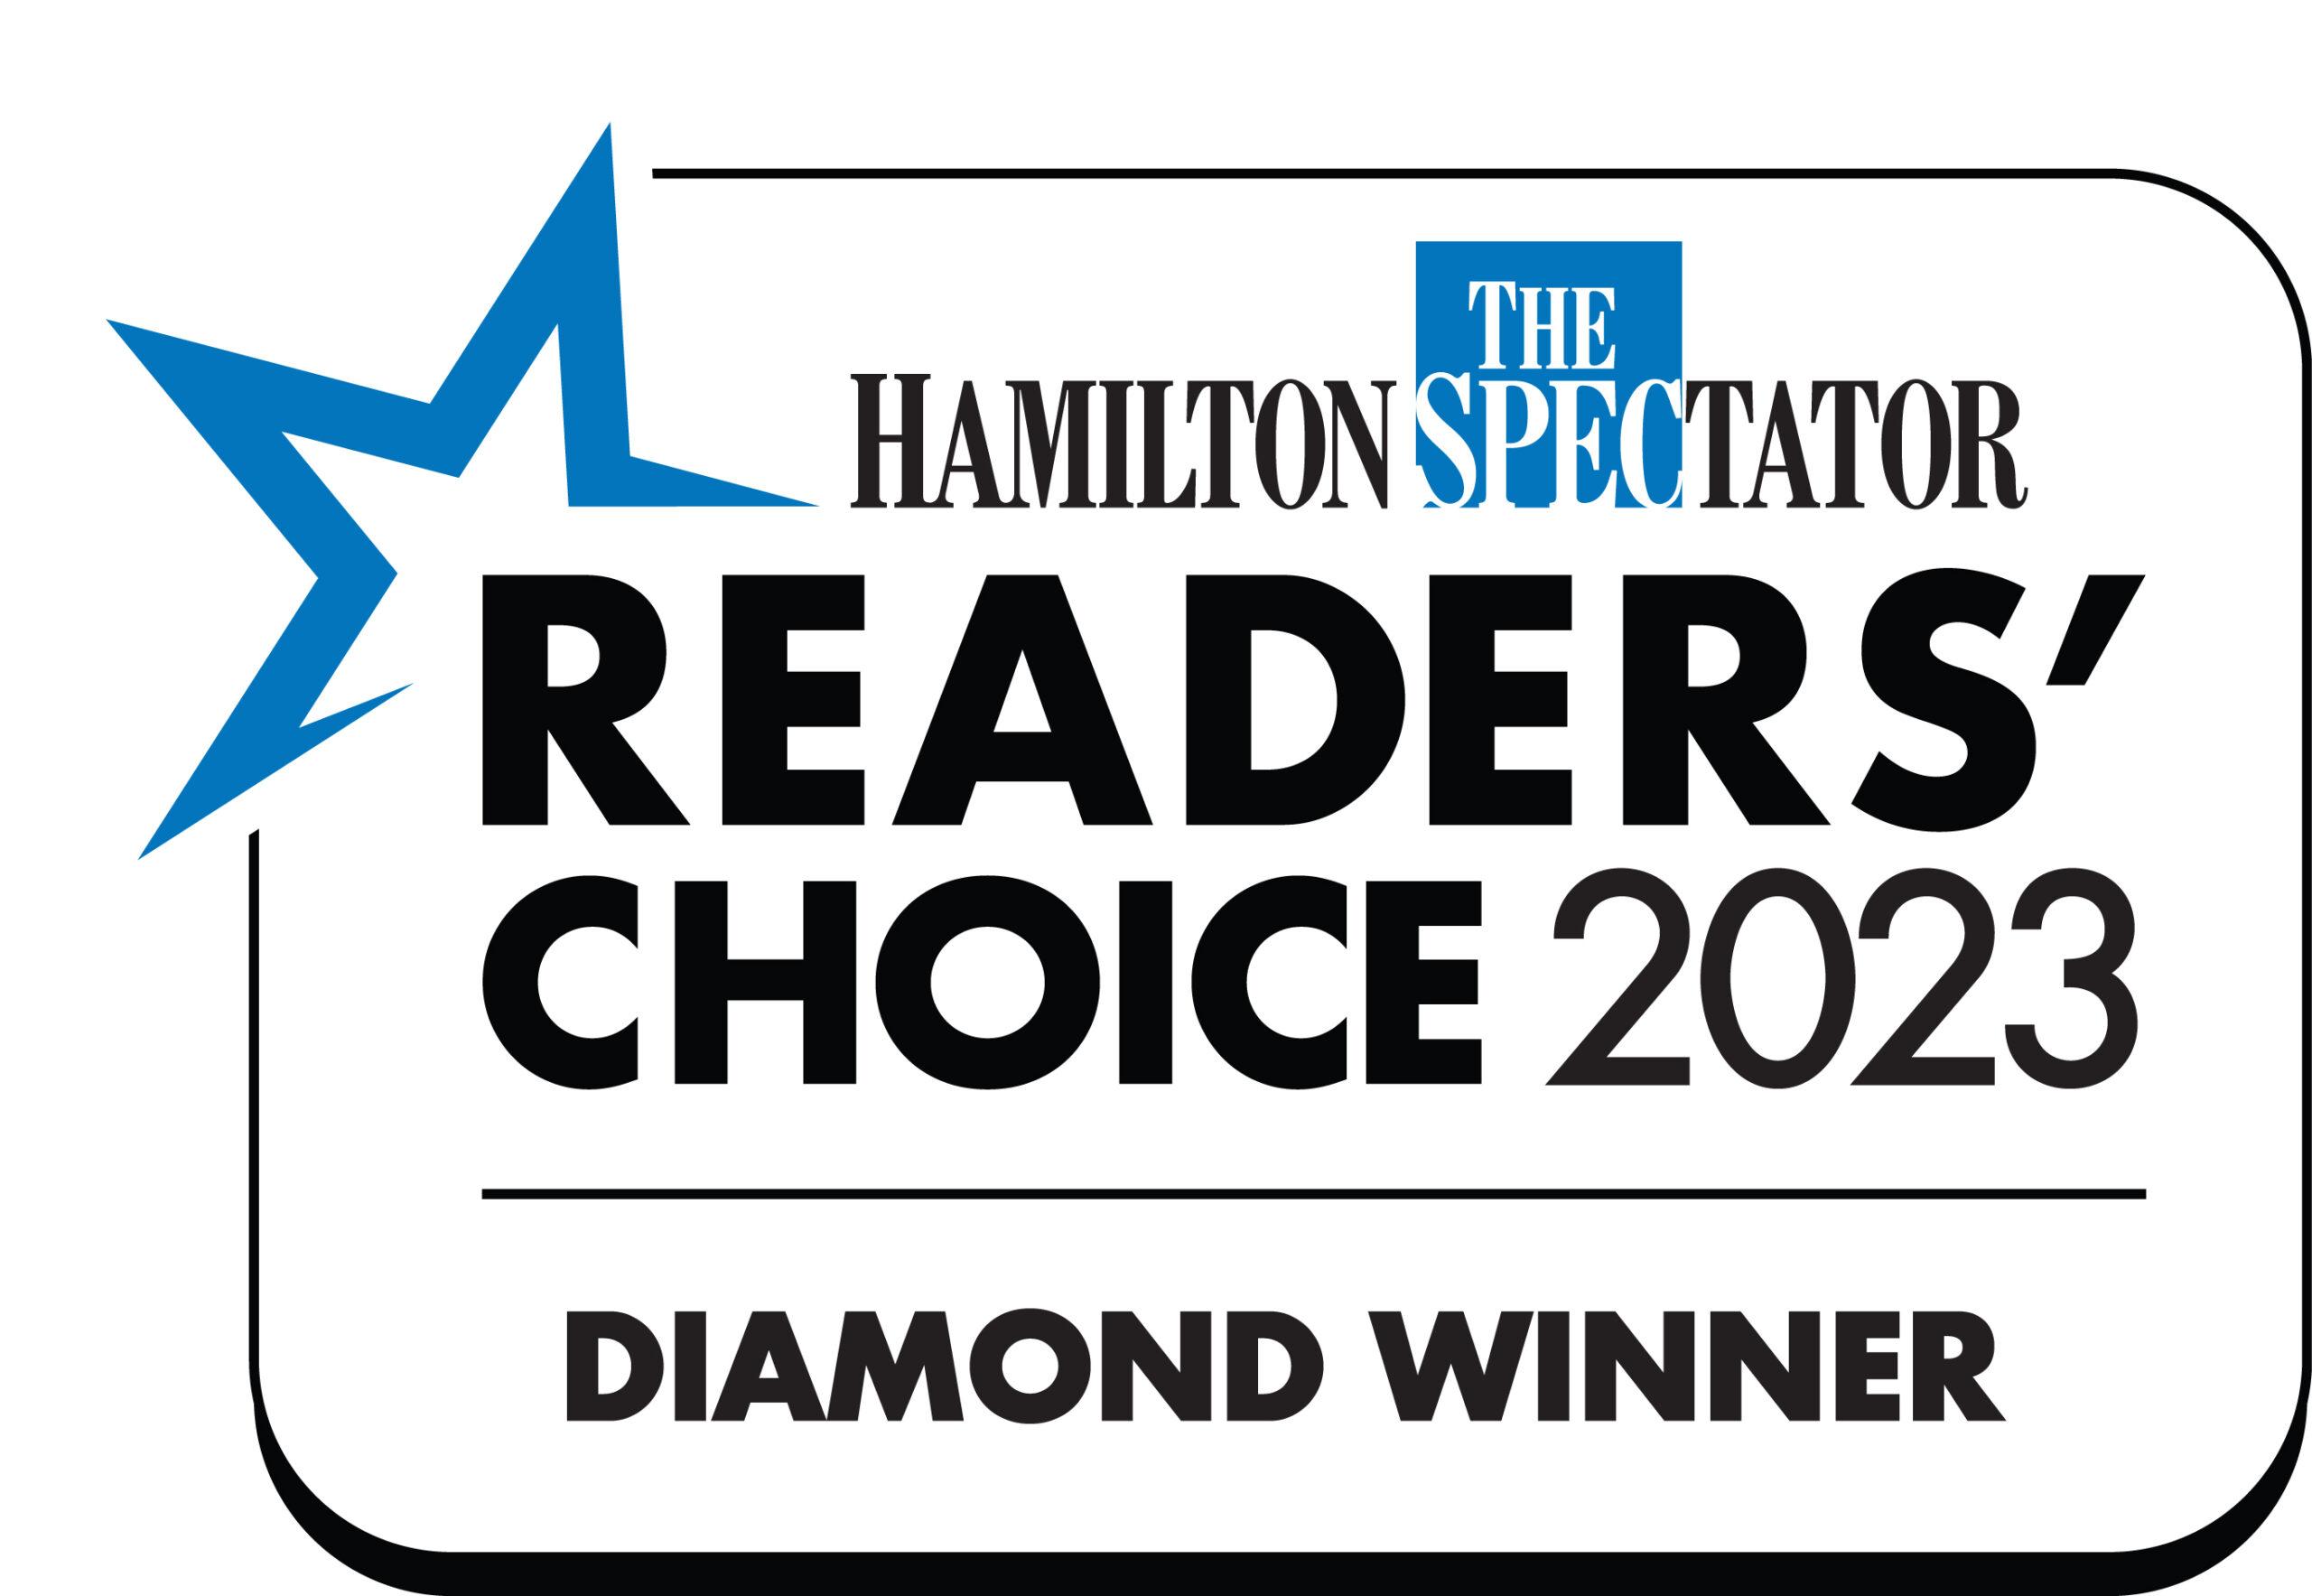 Readers Choice 2023 Diamond Winner